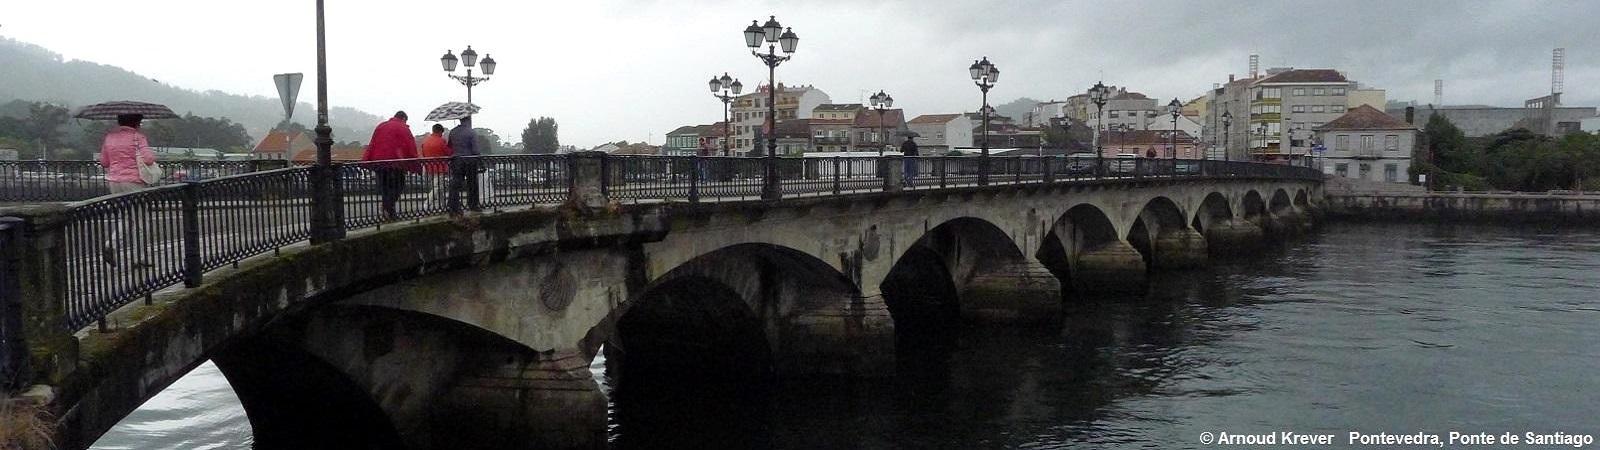 15Portugués (157) Pontevedra (15) Ponte de Santiago